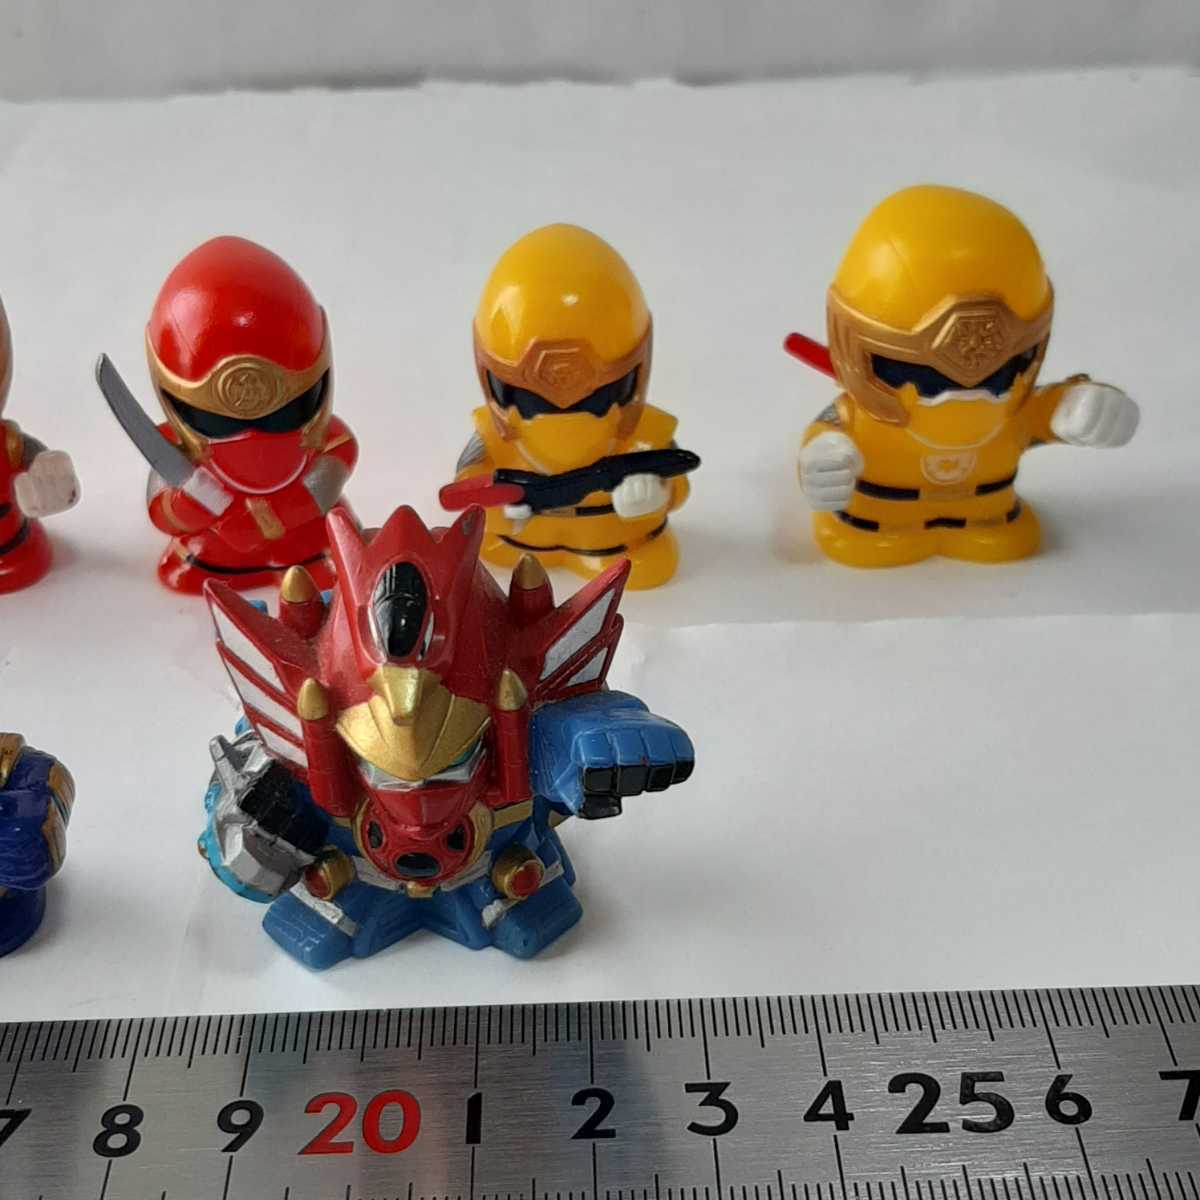  is li ticket ja- finger doll figure Squadron special effects shuli ticket ja- go laija- toy toy JAPAN TOYS POWER Rangers sofvi retro 